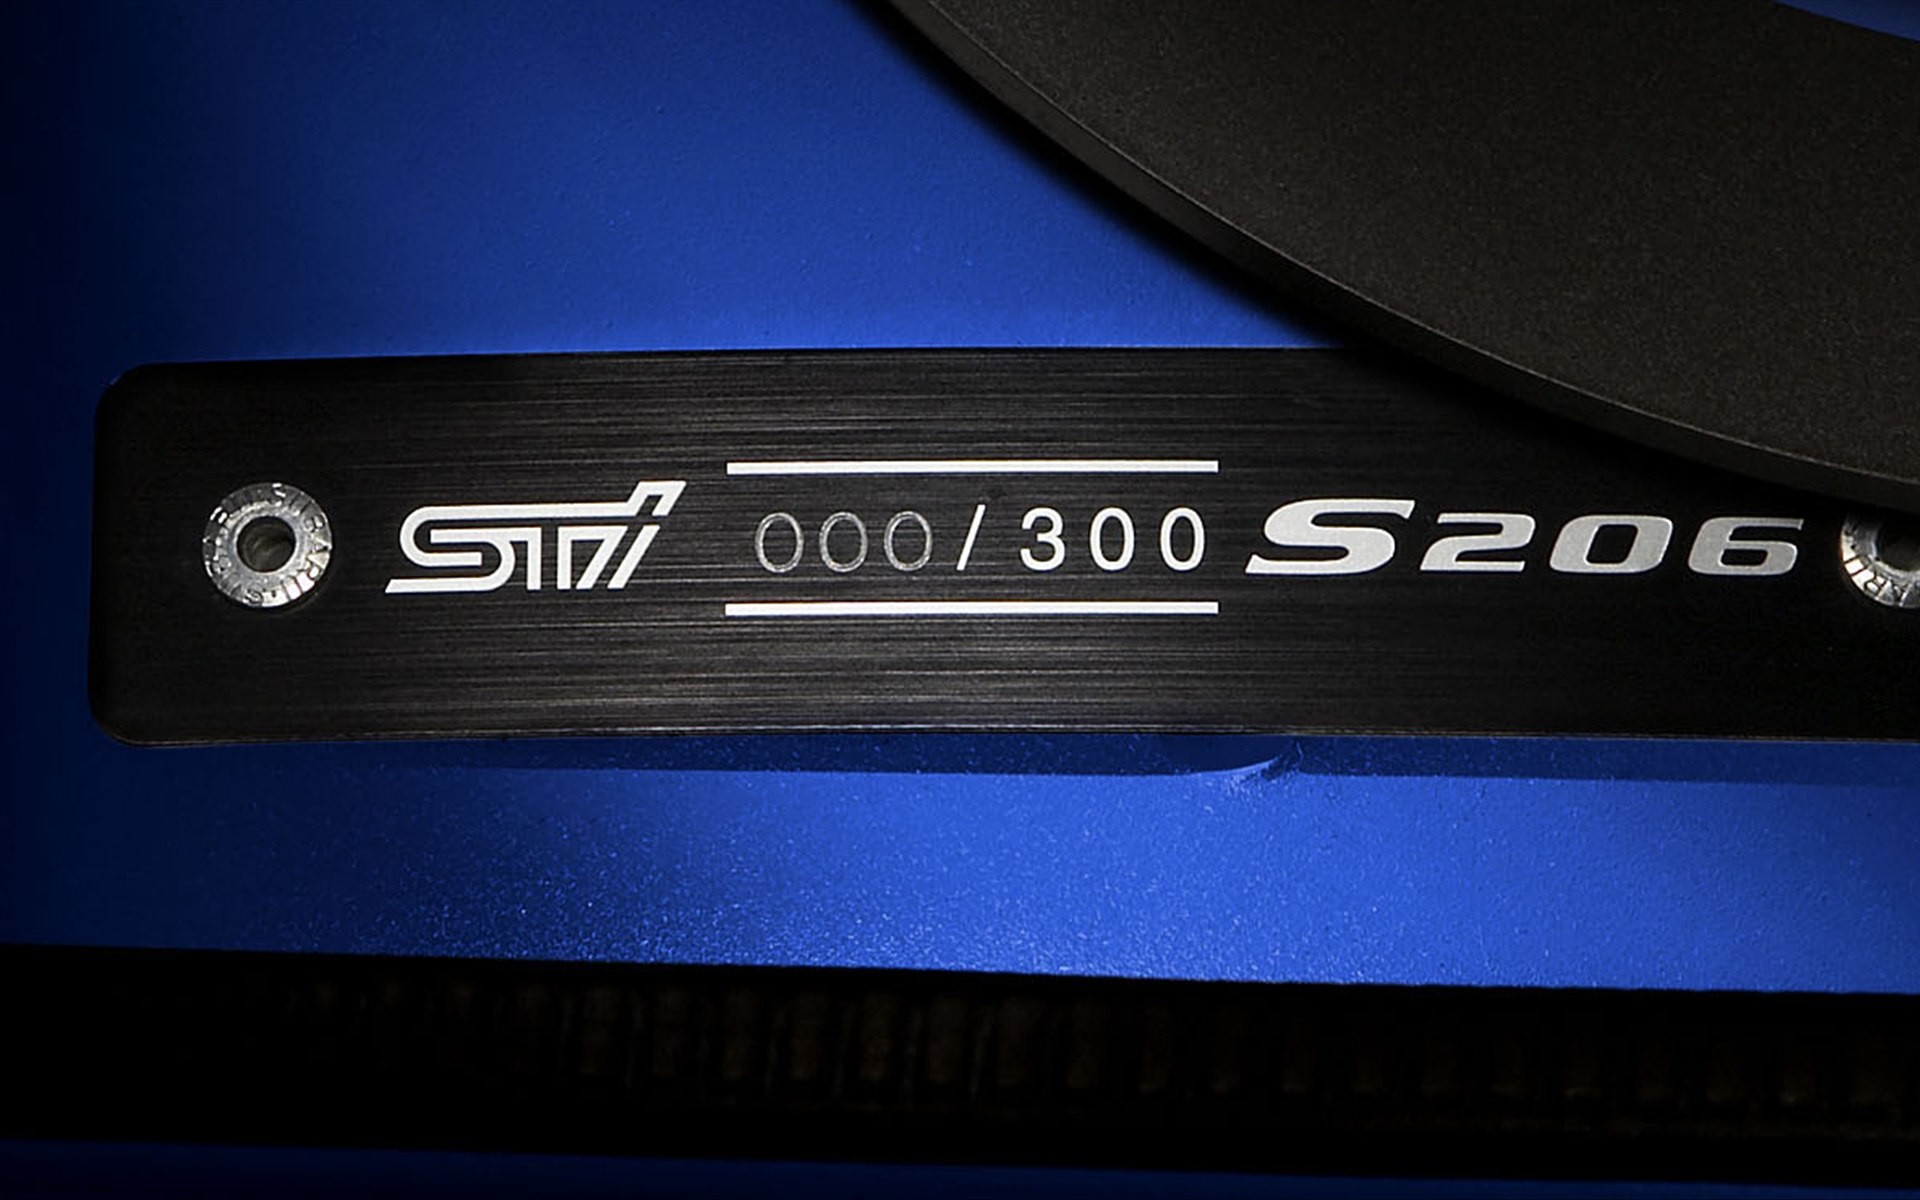 2012 SUBARU IMPREZA WRX STI S206 S13